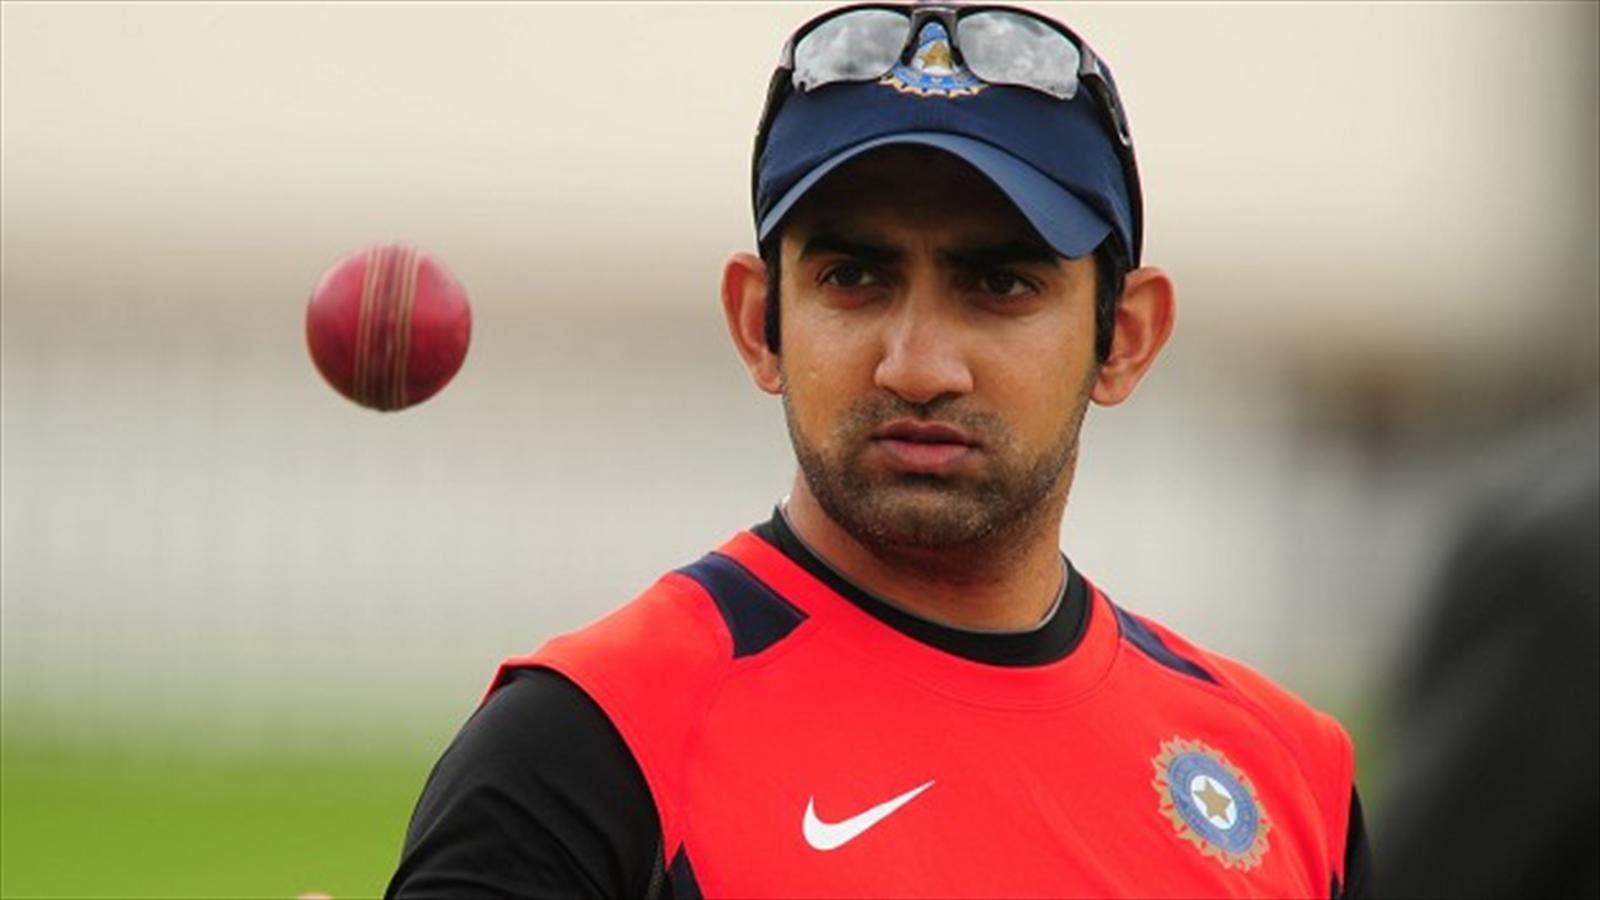 Films shouldn’t be made on cricketers : Gautam Gambhir